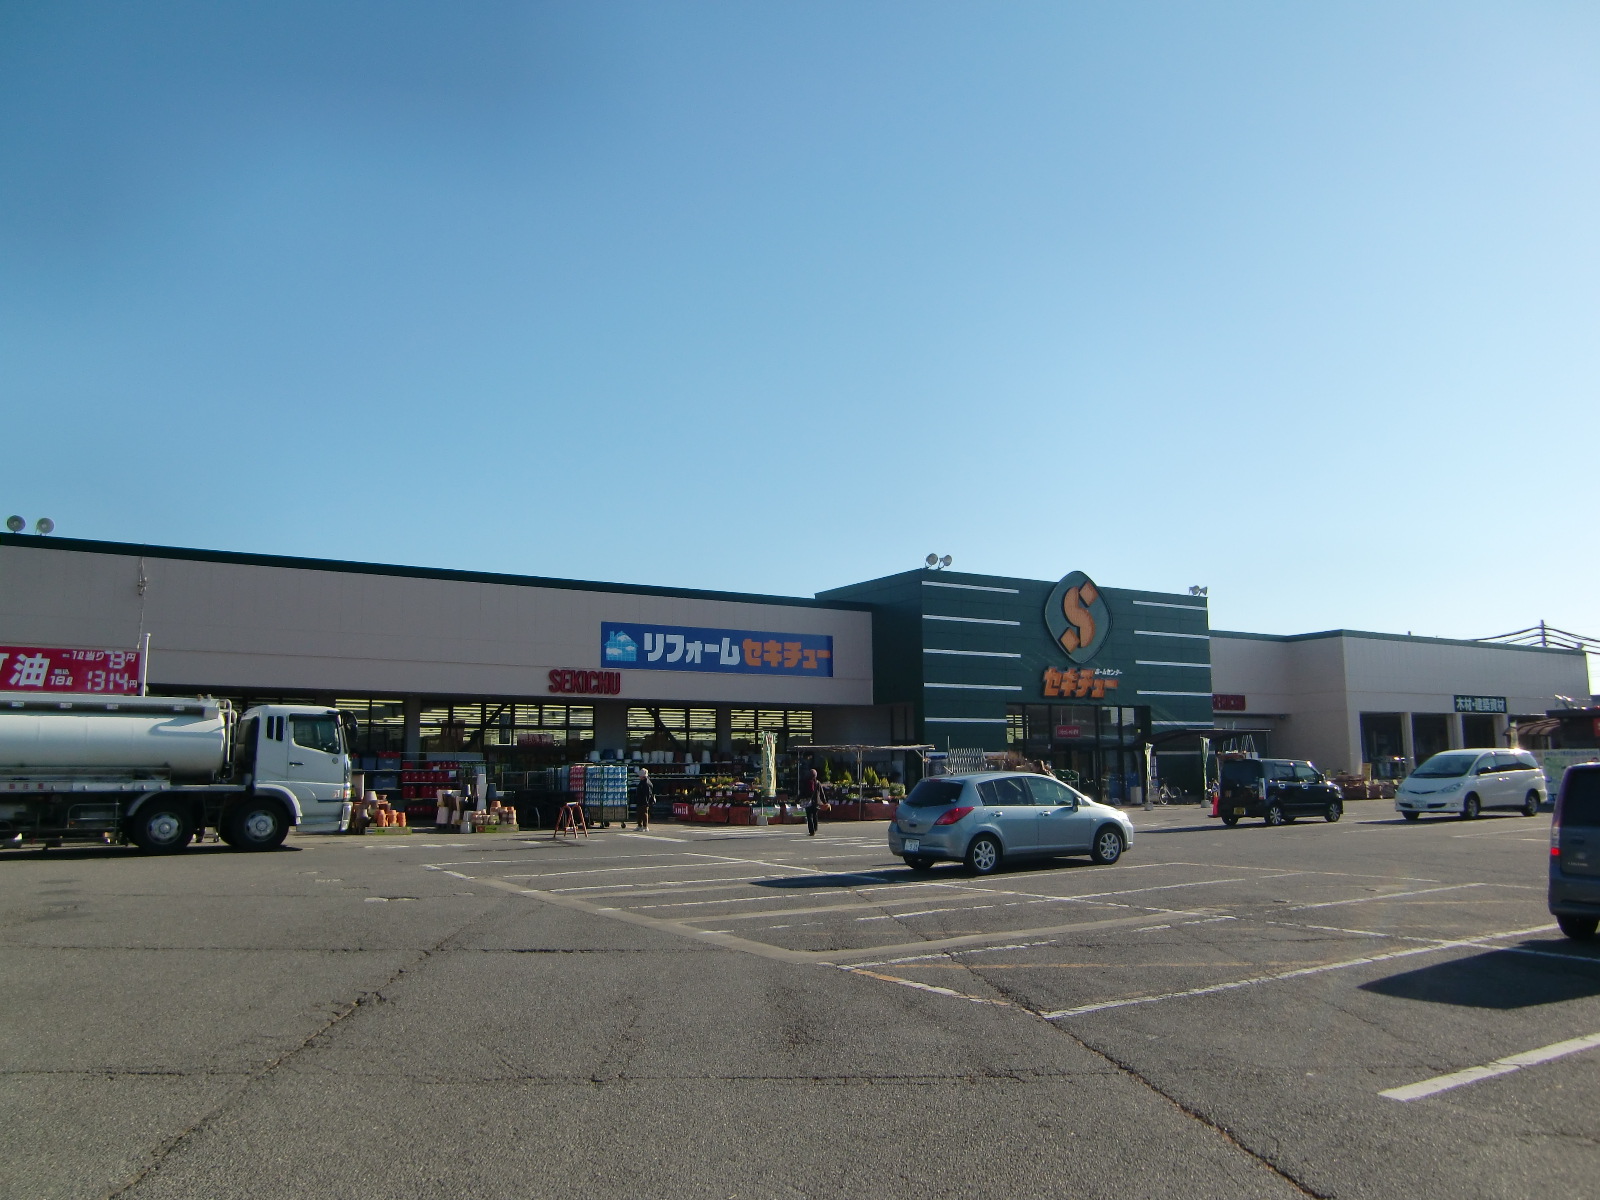 Home center. Sekichu Sekine store (hardware store) to 836m